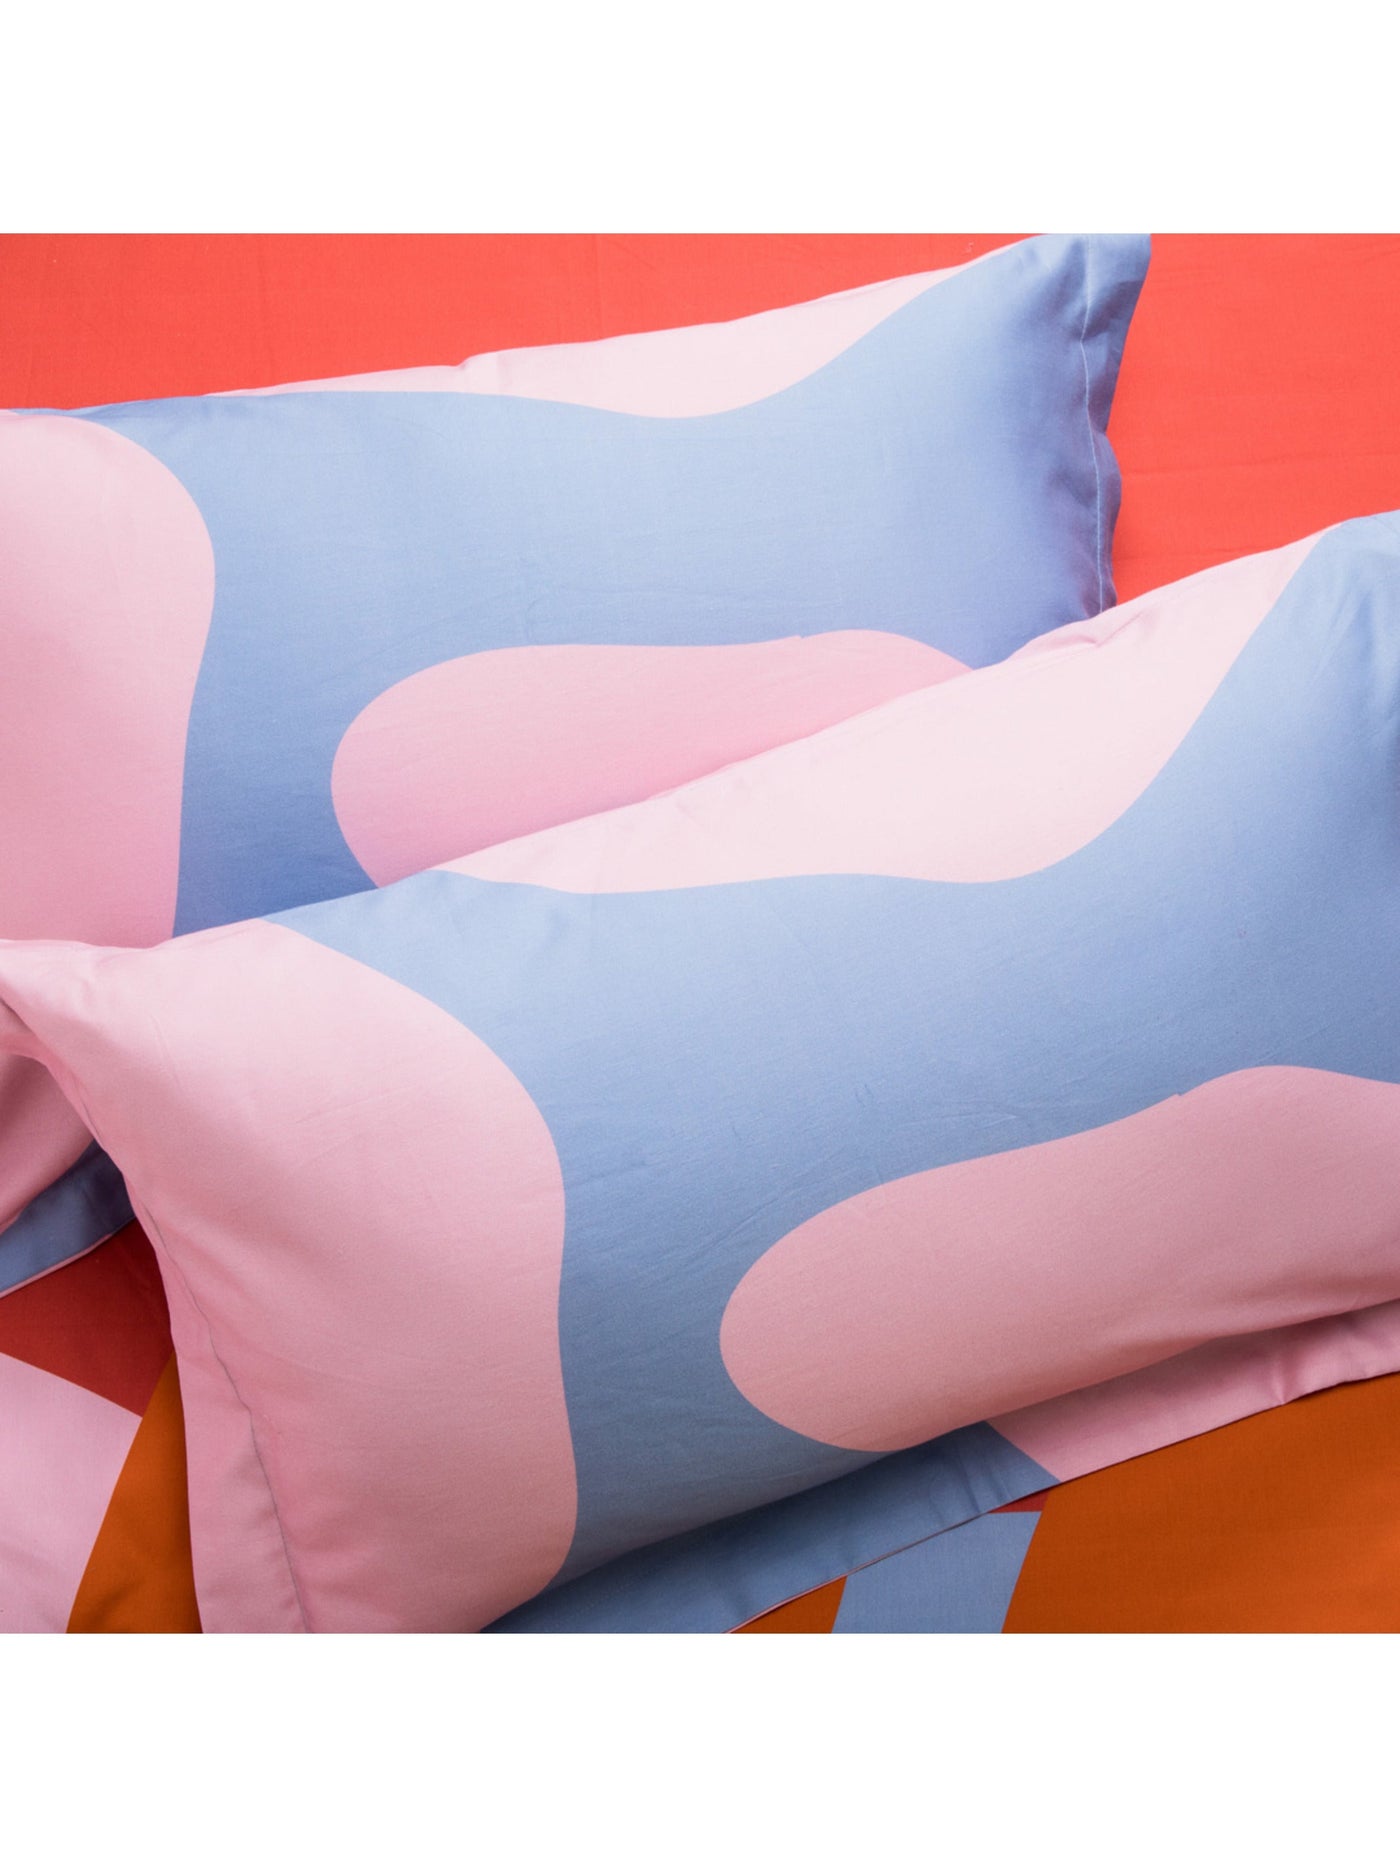 The Matisse Meets Memphis Bedsheet In Red & Blue Copy